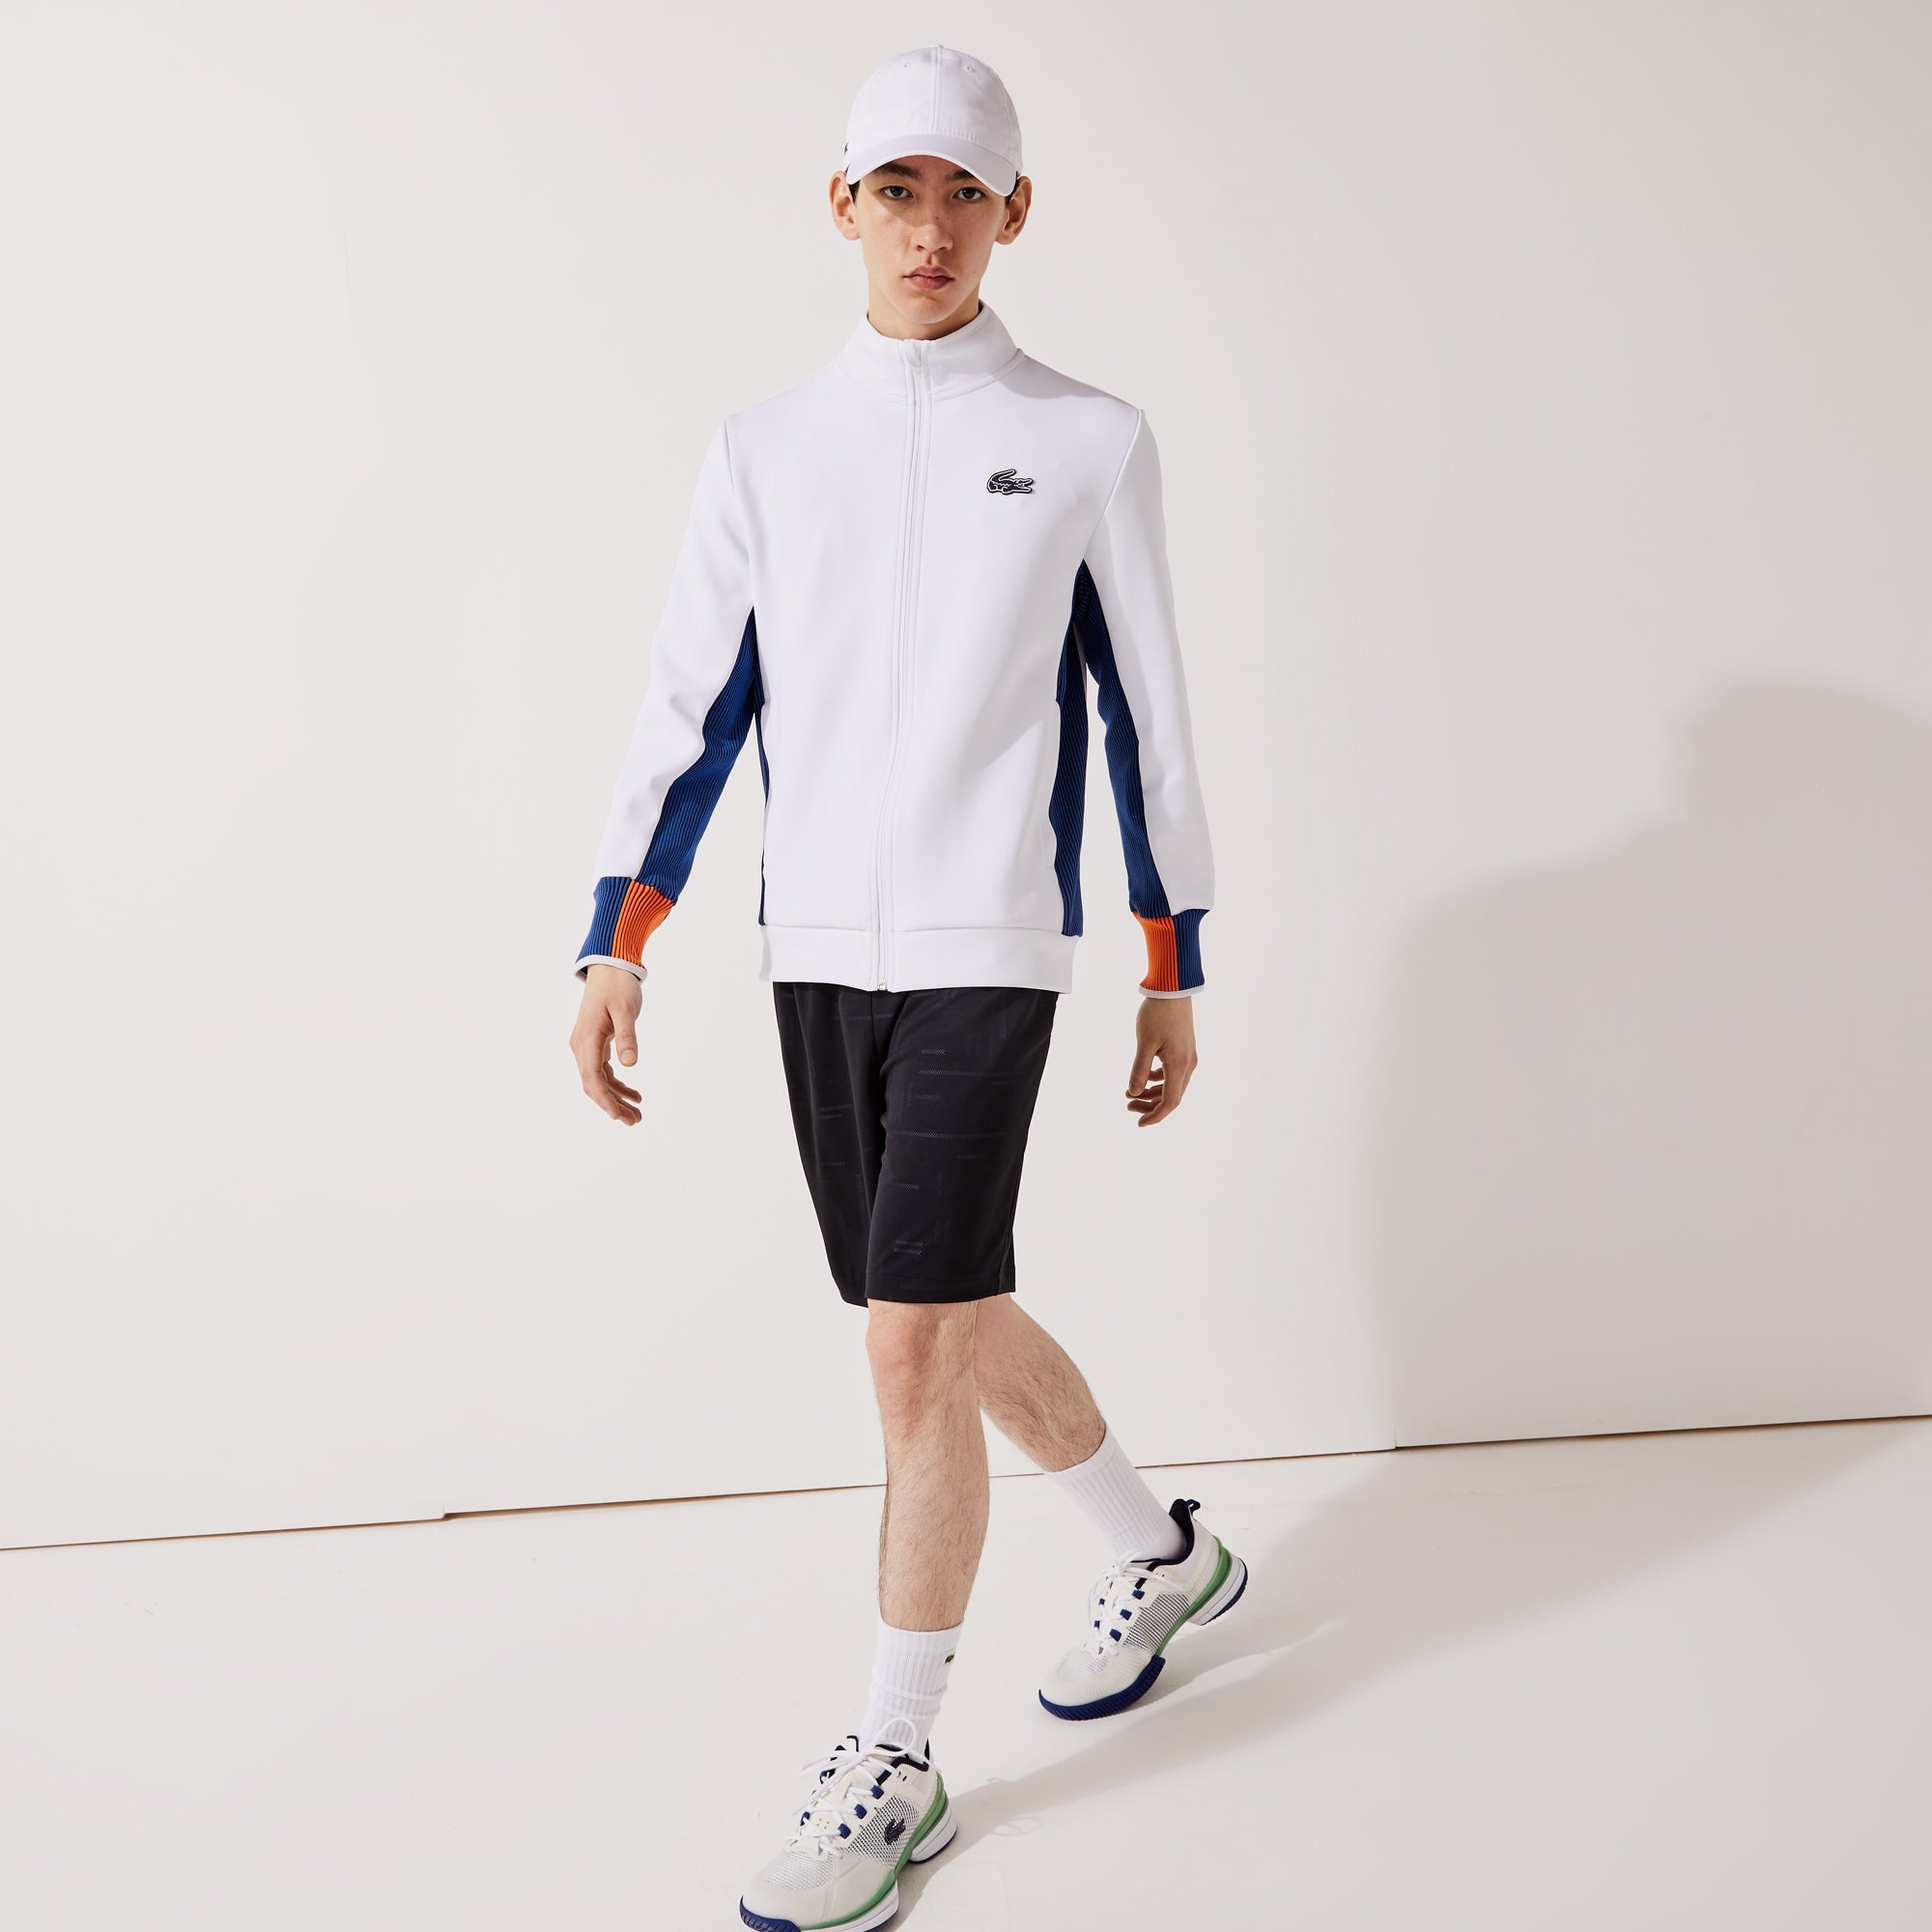 Lacoste Men's Tennis Jacket White (3)